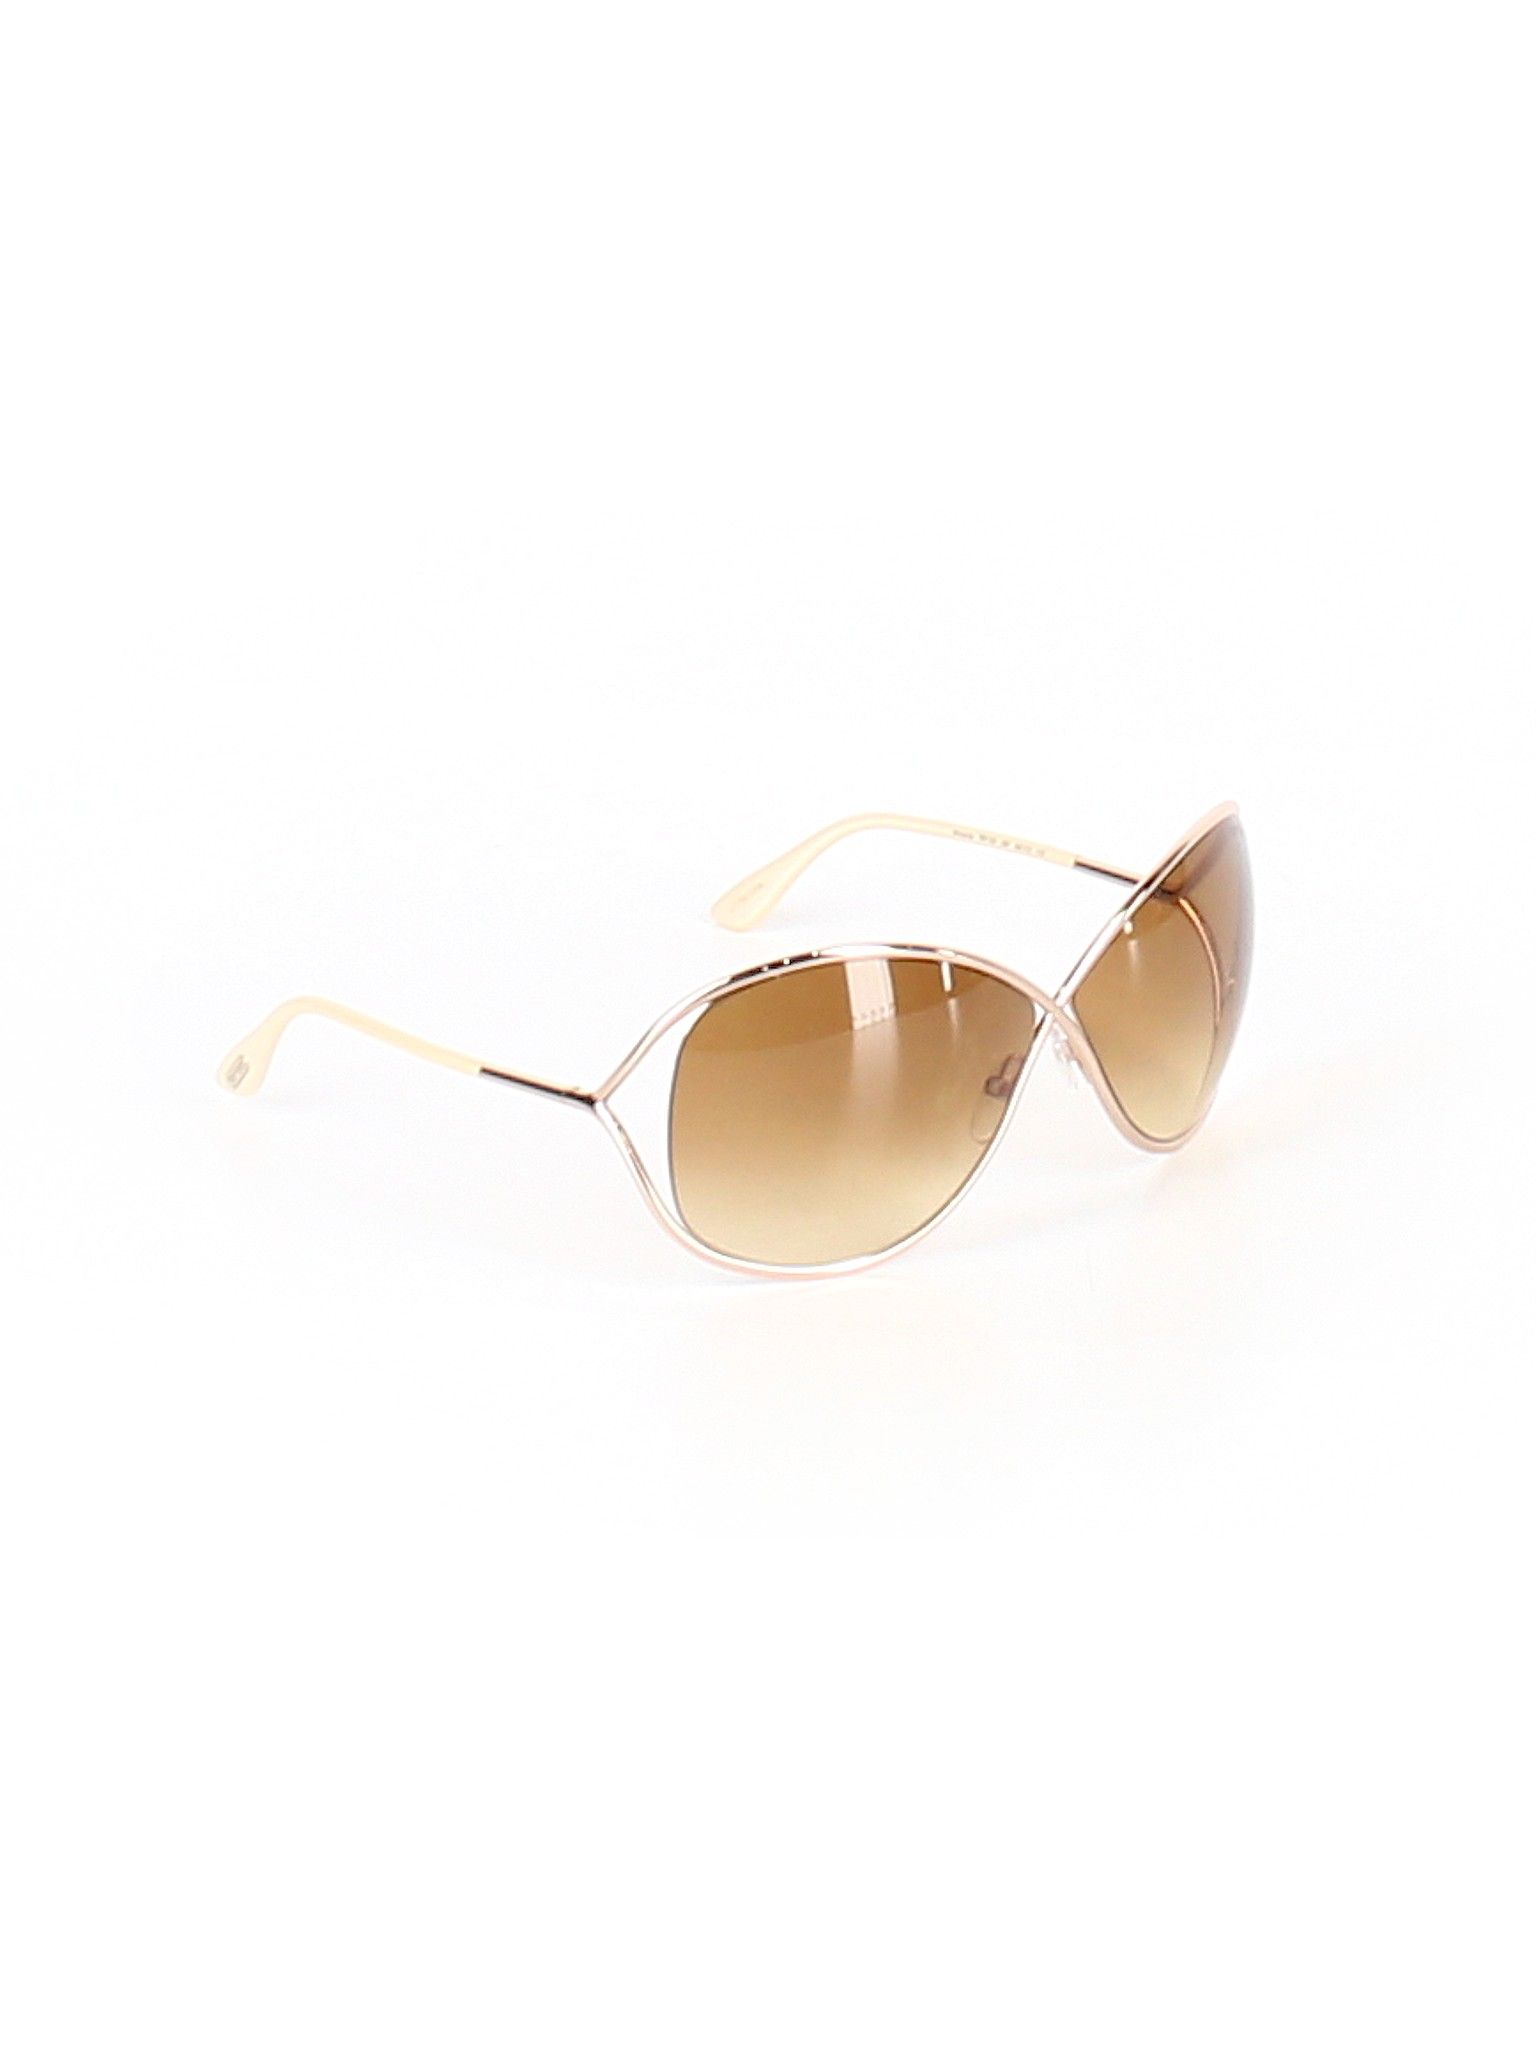 Tom Ford Sunglasses Size 00: Tan Women's Accessories - 43374761 | thredUP